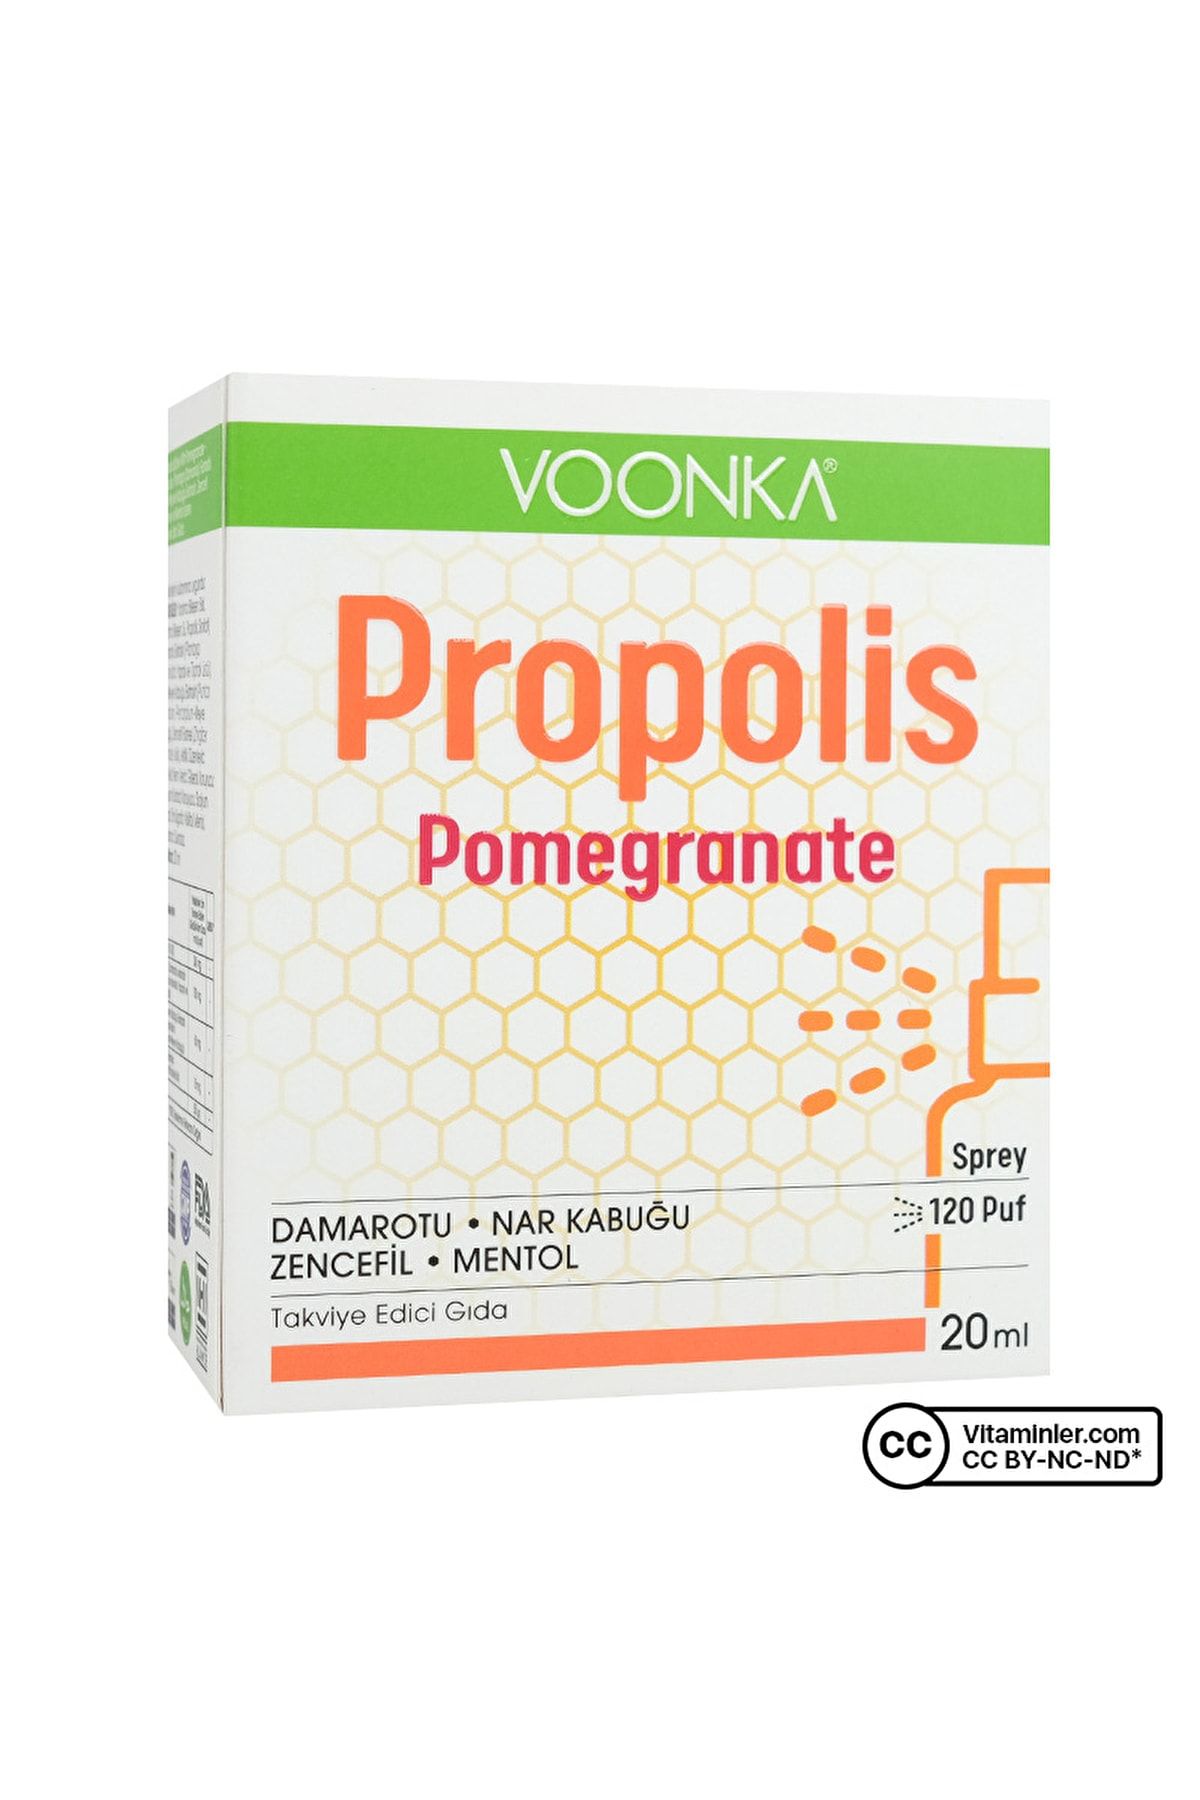 Voonka Propolis Pomegranate 20 ml Sprey